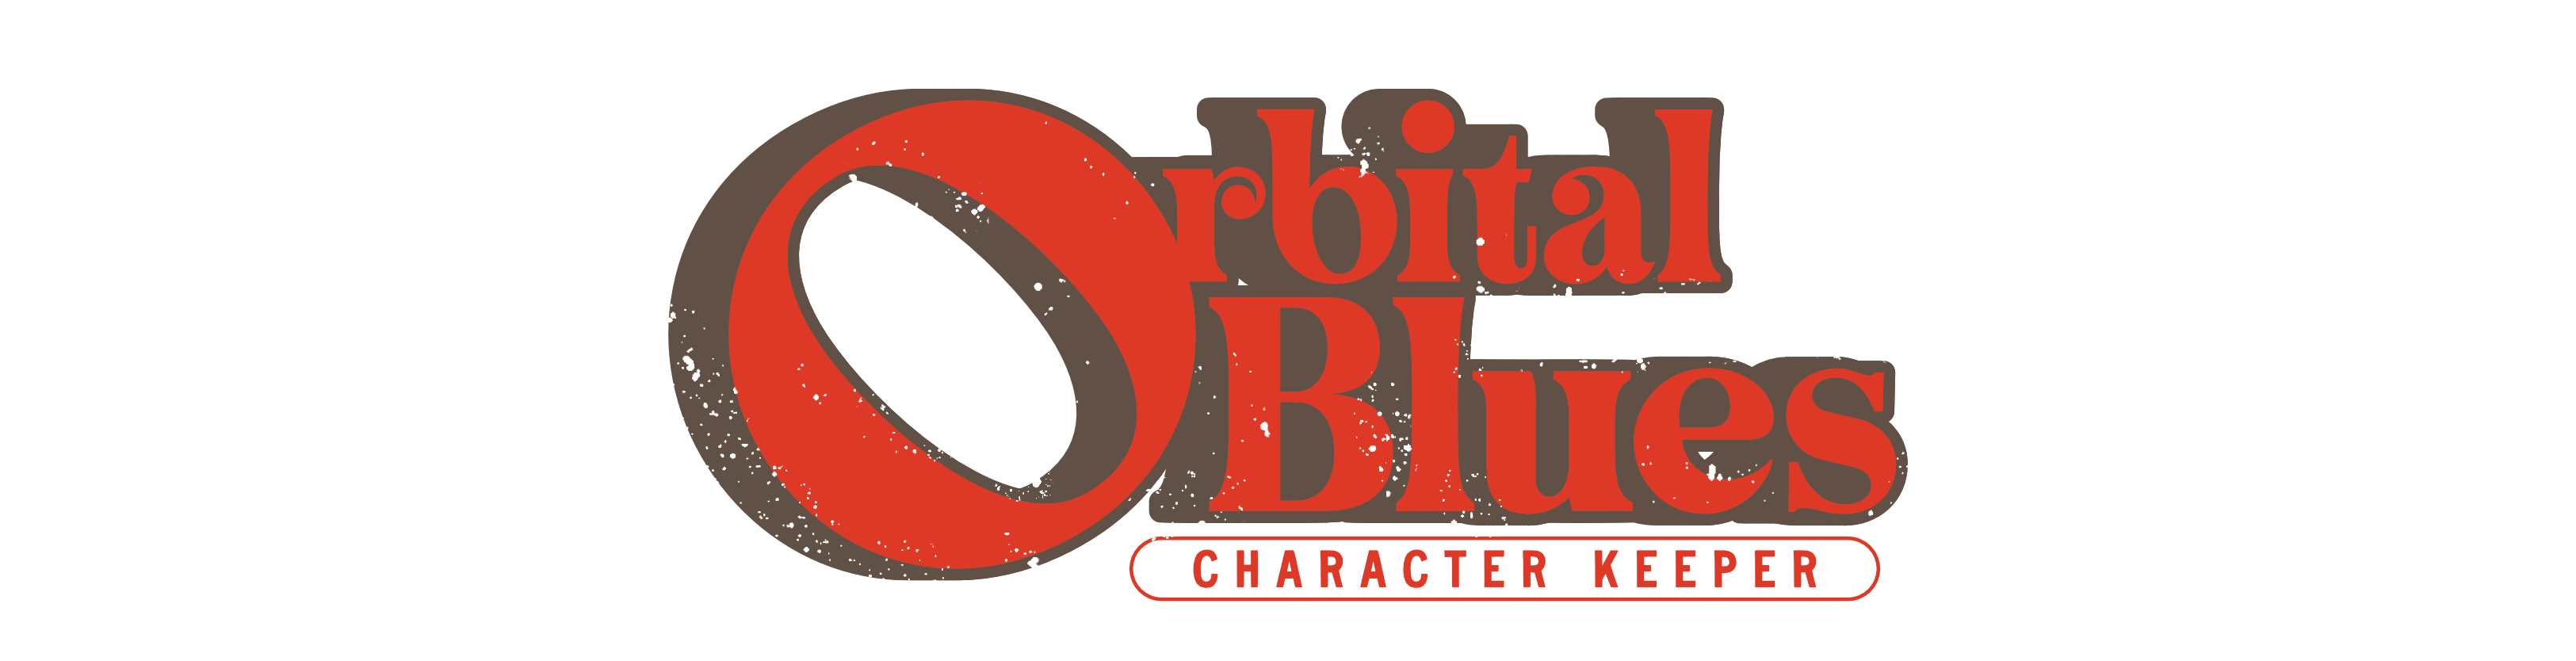 Orbital Blues Character Keeper